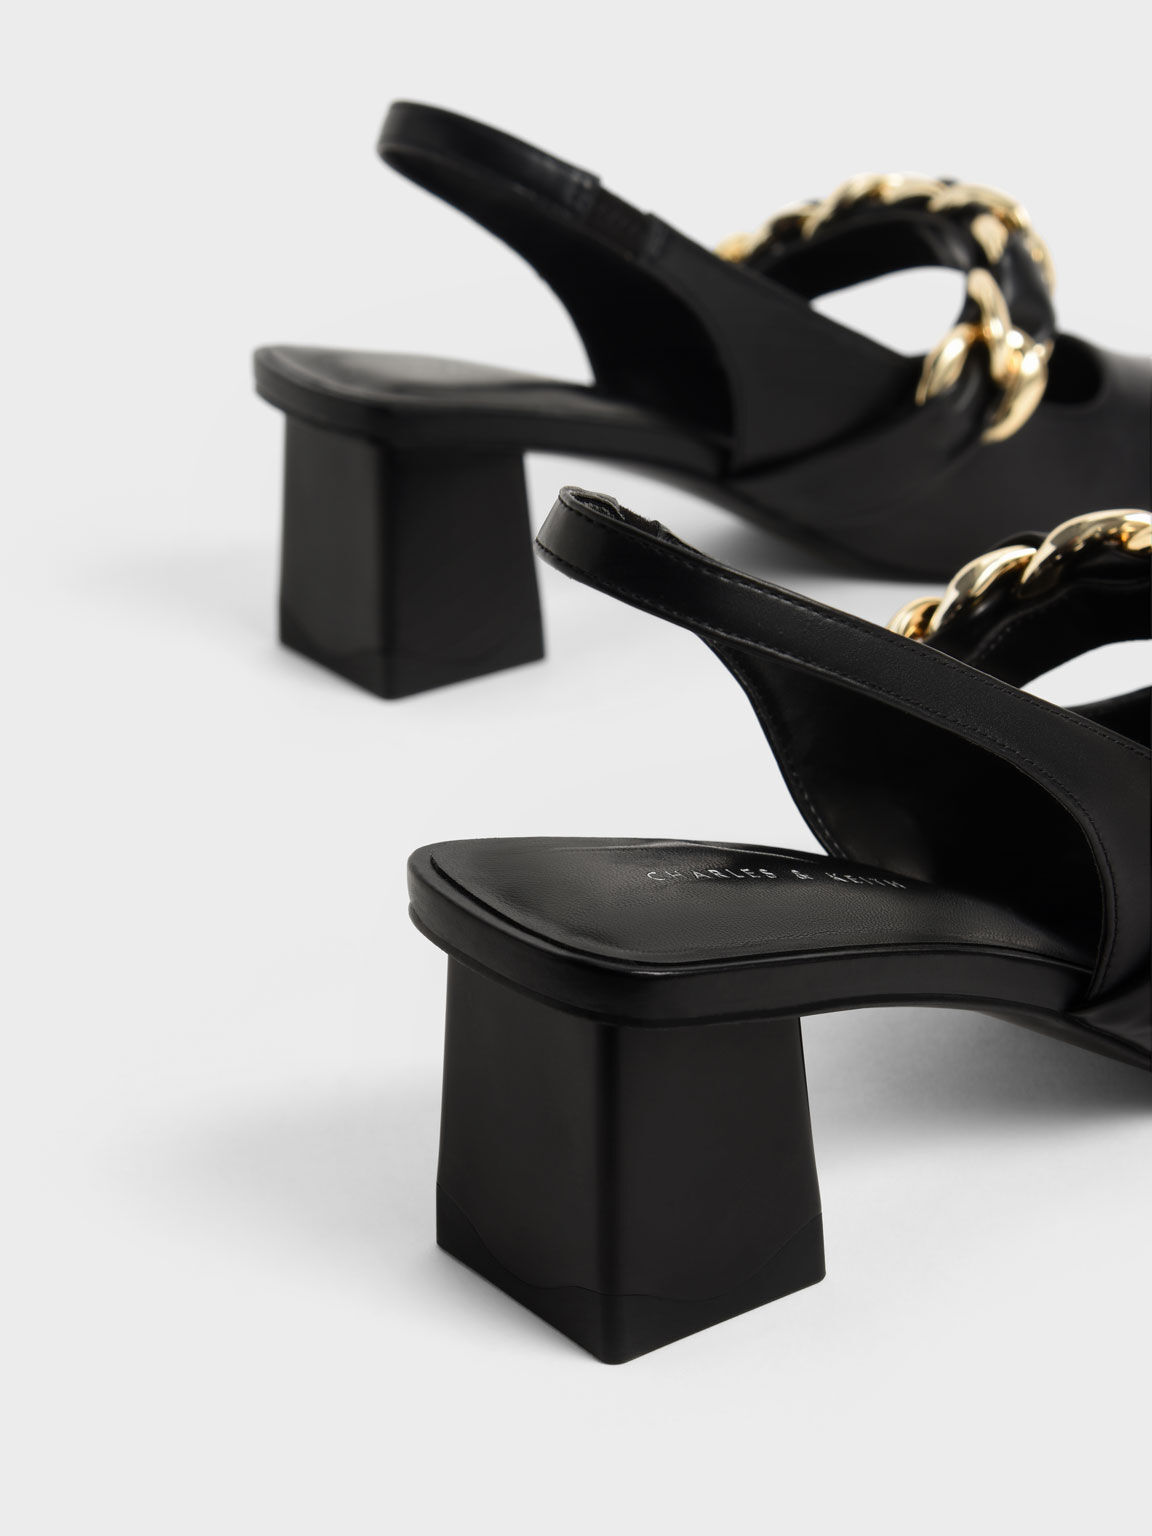 Sepatu Pumps Braided Chain-Link Slingback, Black, hi-res